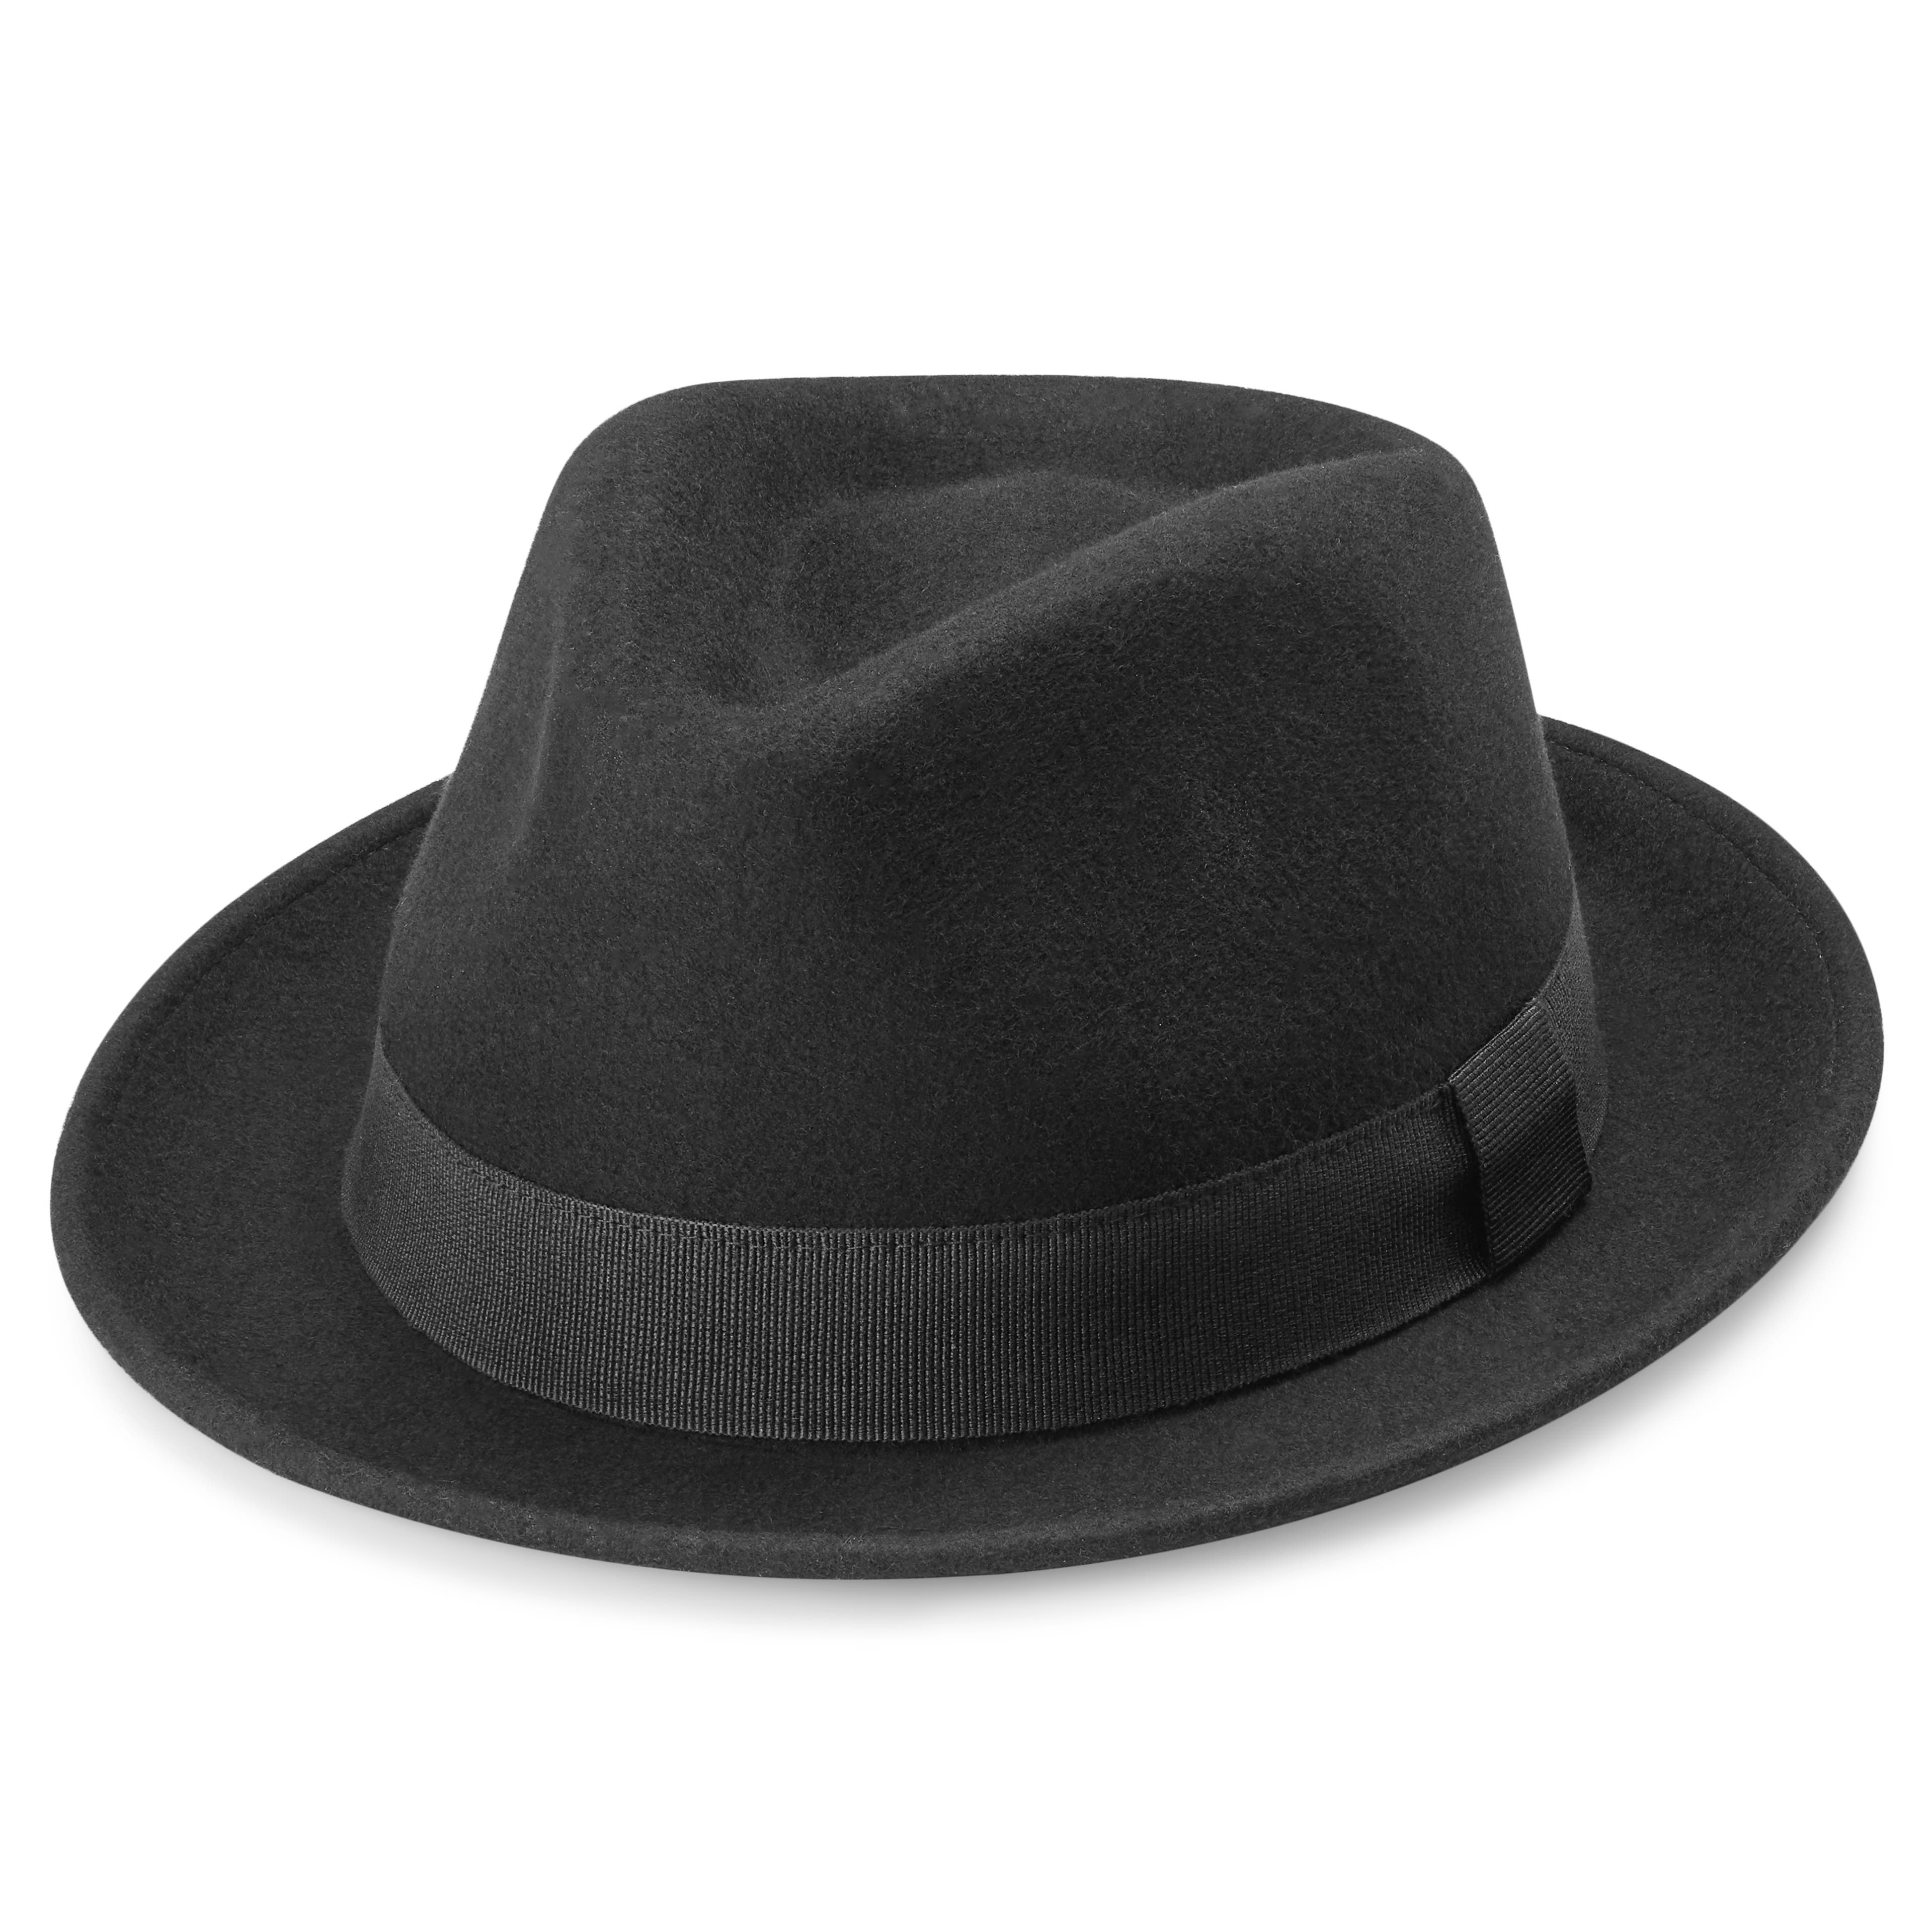 Tomasso černý klobouk Moda Trilby